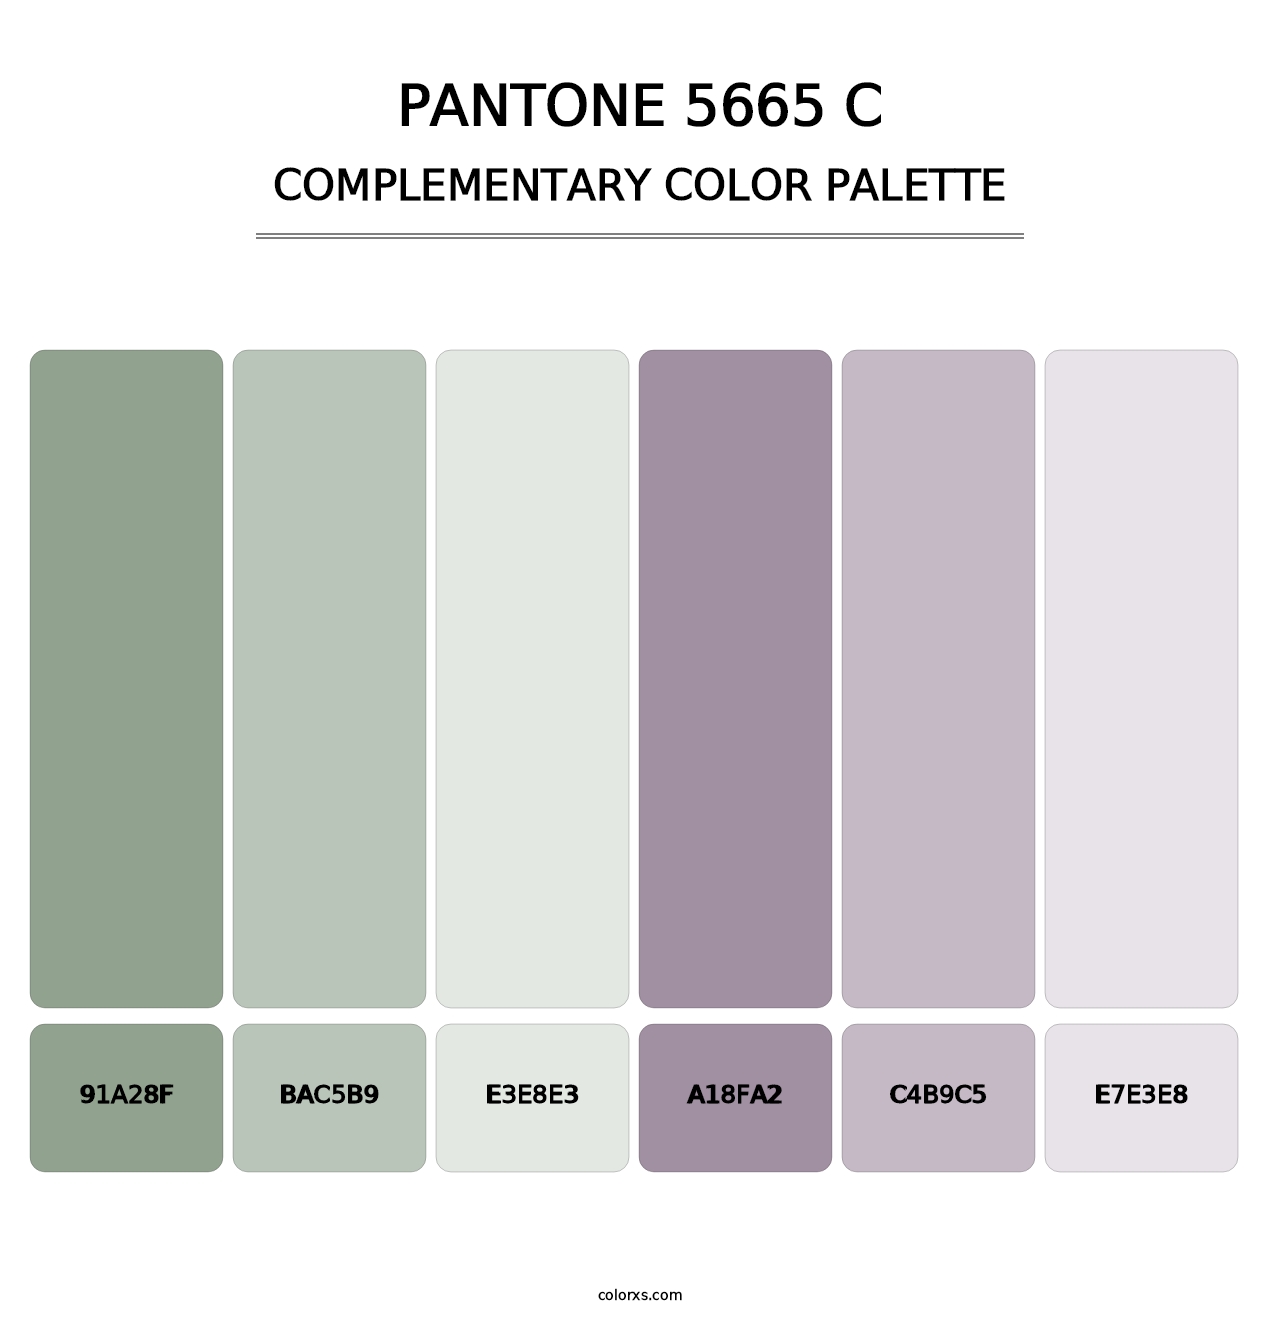 PANTONE 5665 C - Complementary Color Palette